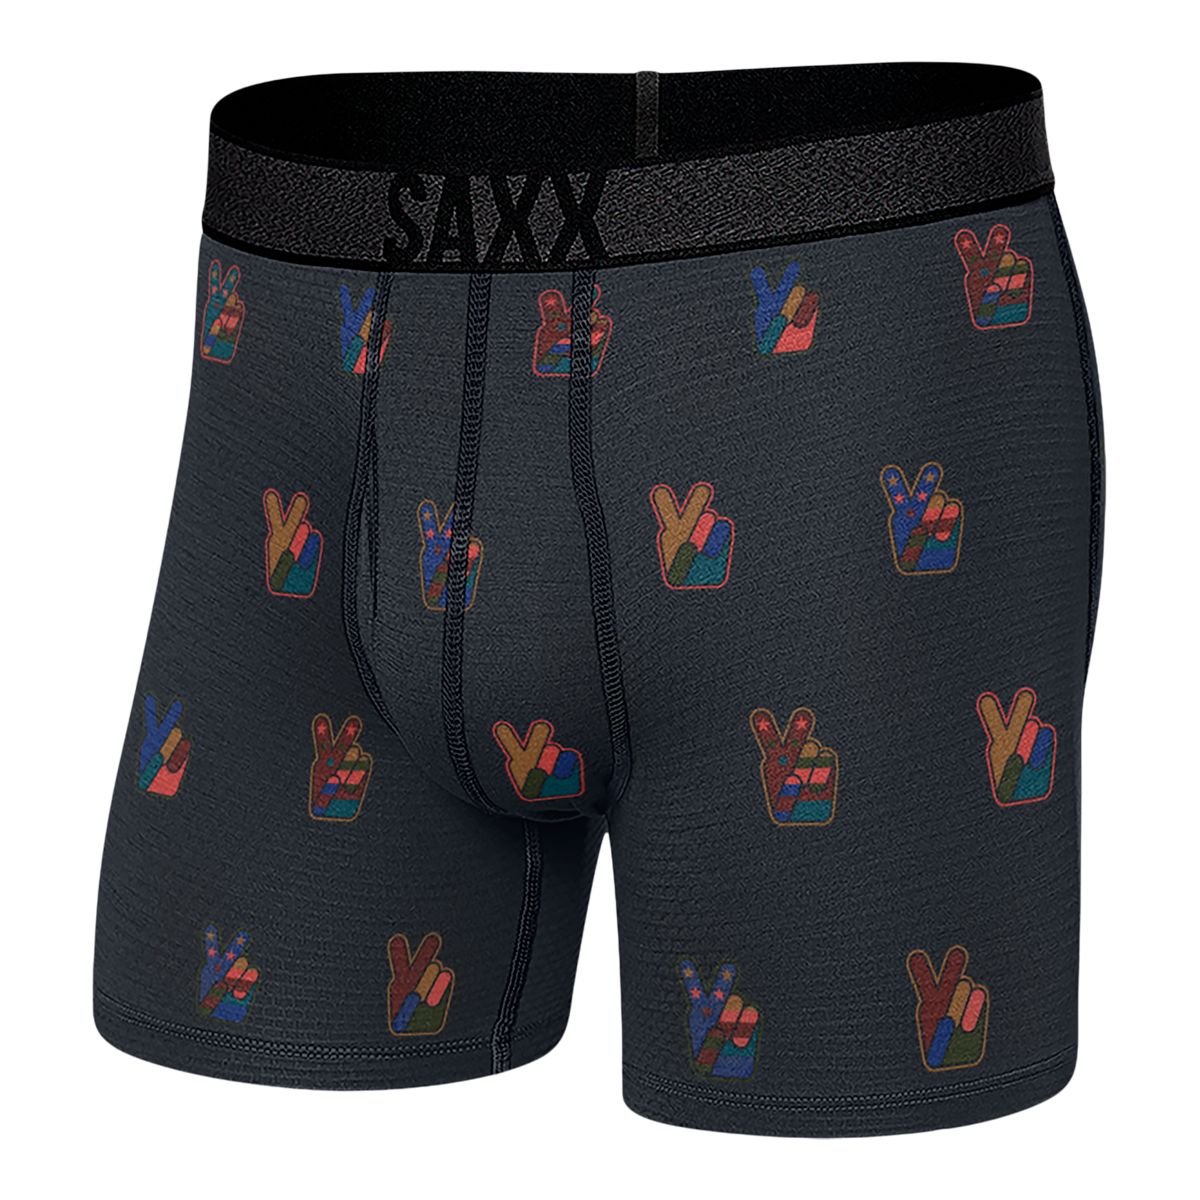 Saxx Men's Roastmaster Boxer Brief